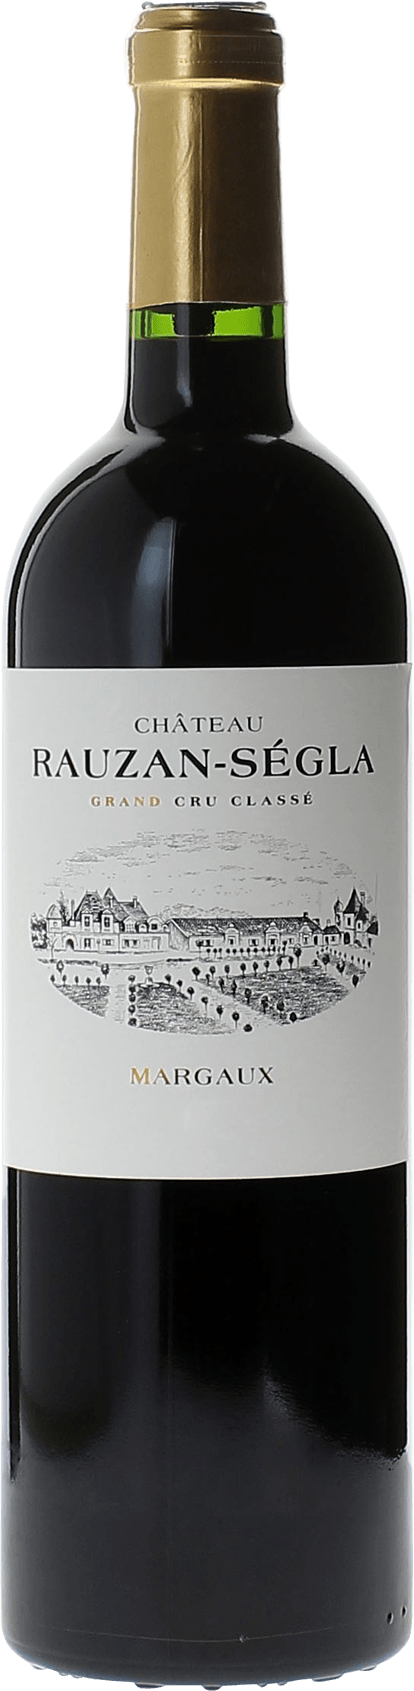 Rauzan-segla 2016 2me Grand cru class Margaux, Bordeaux rouge